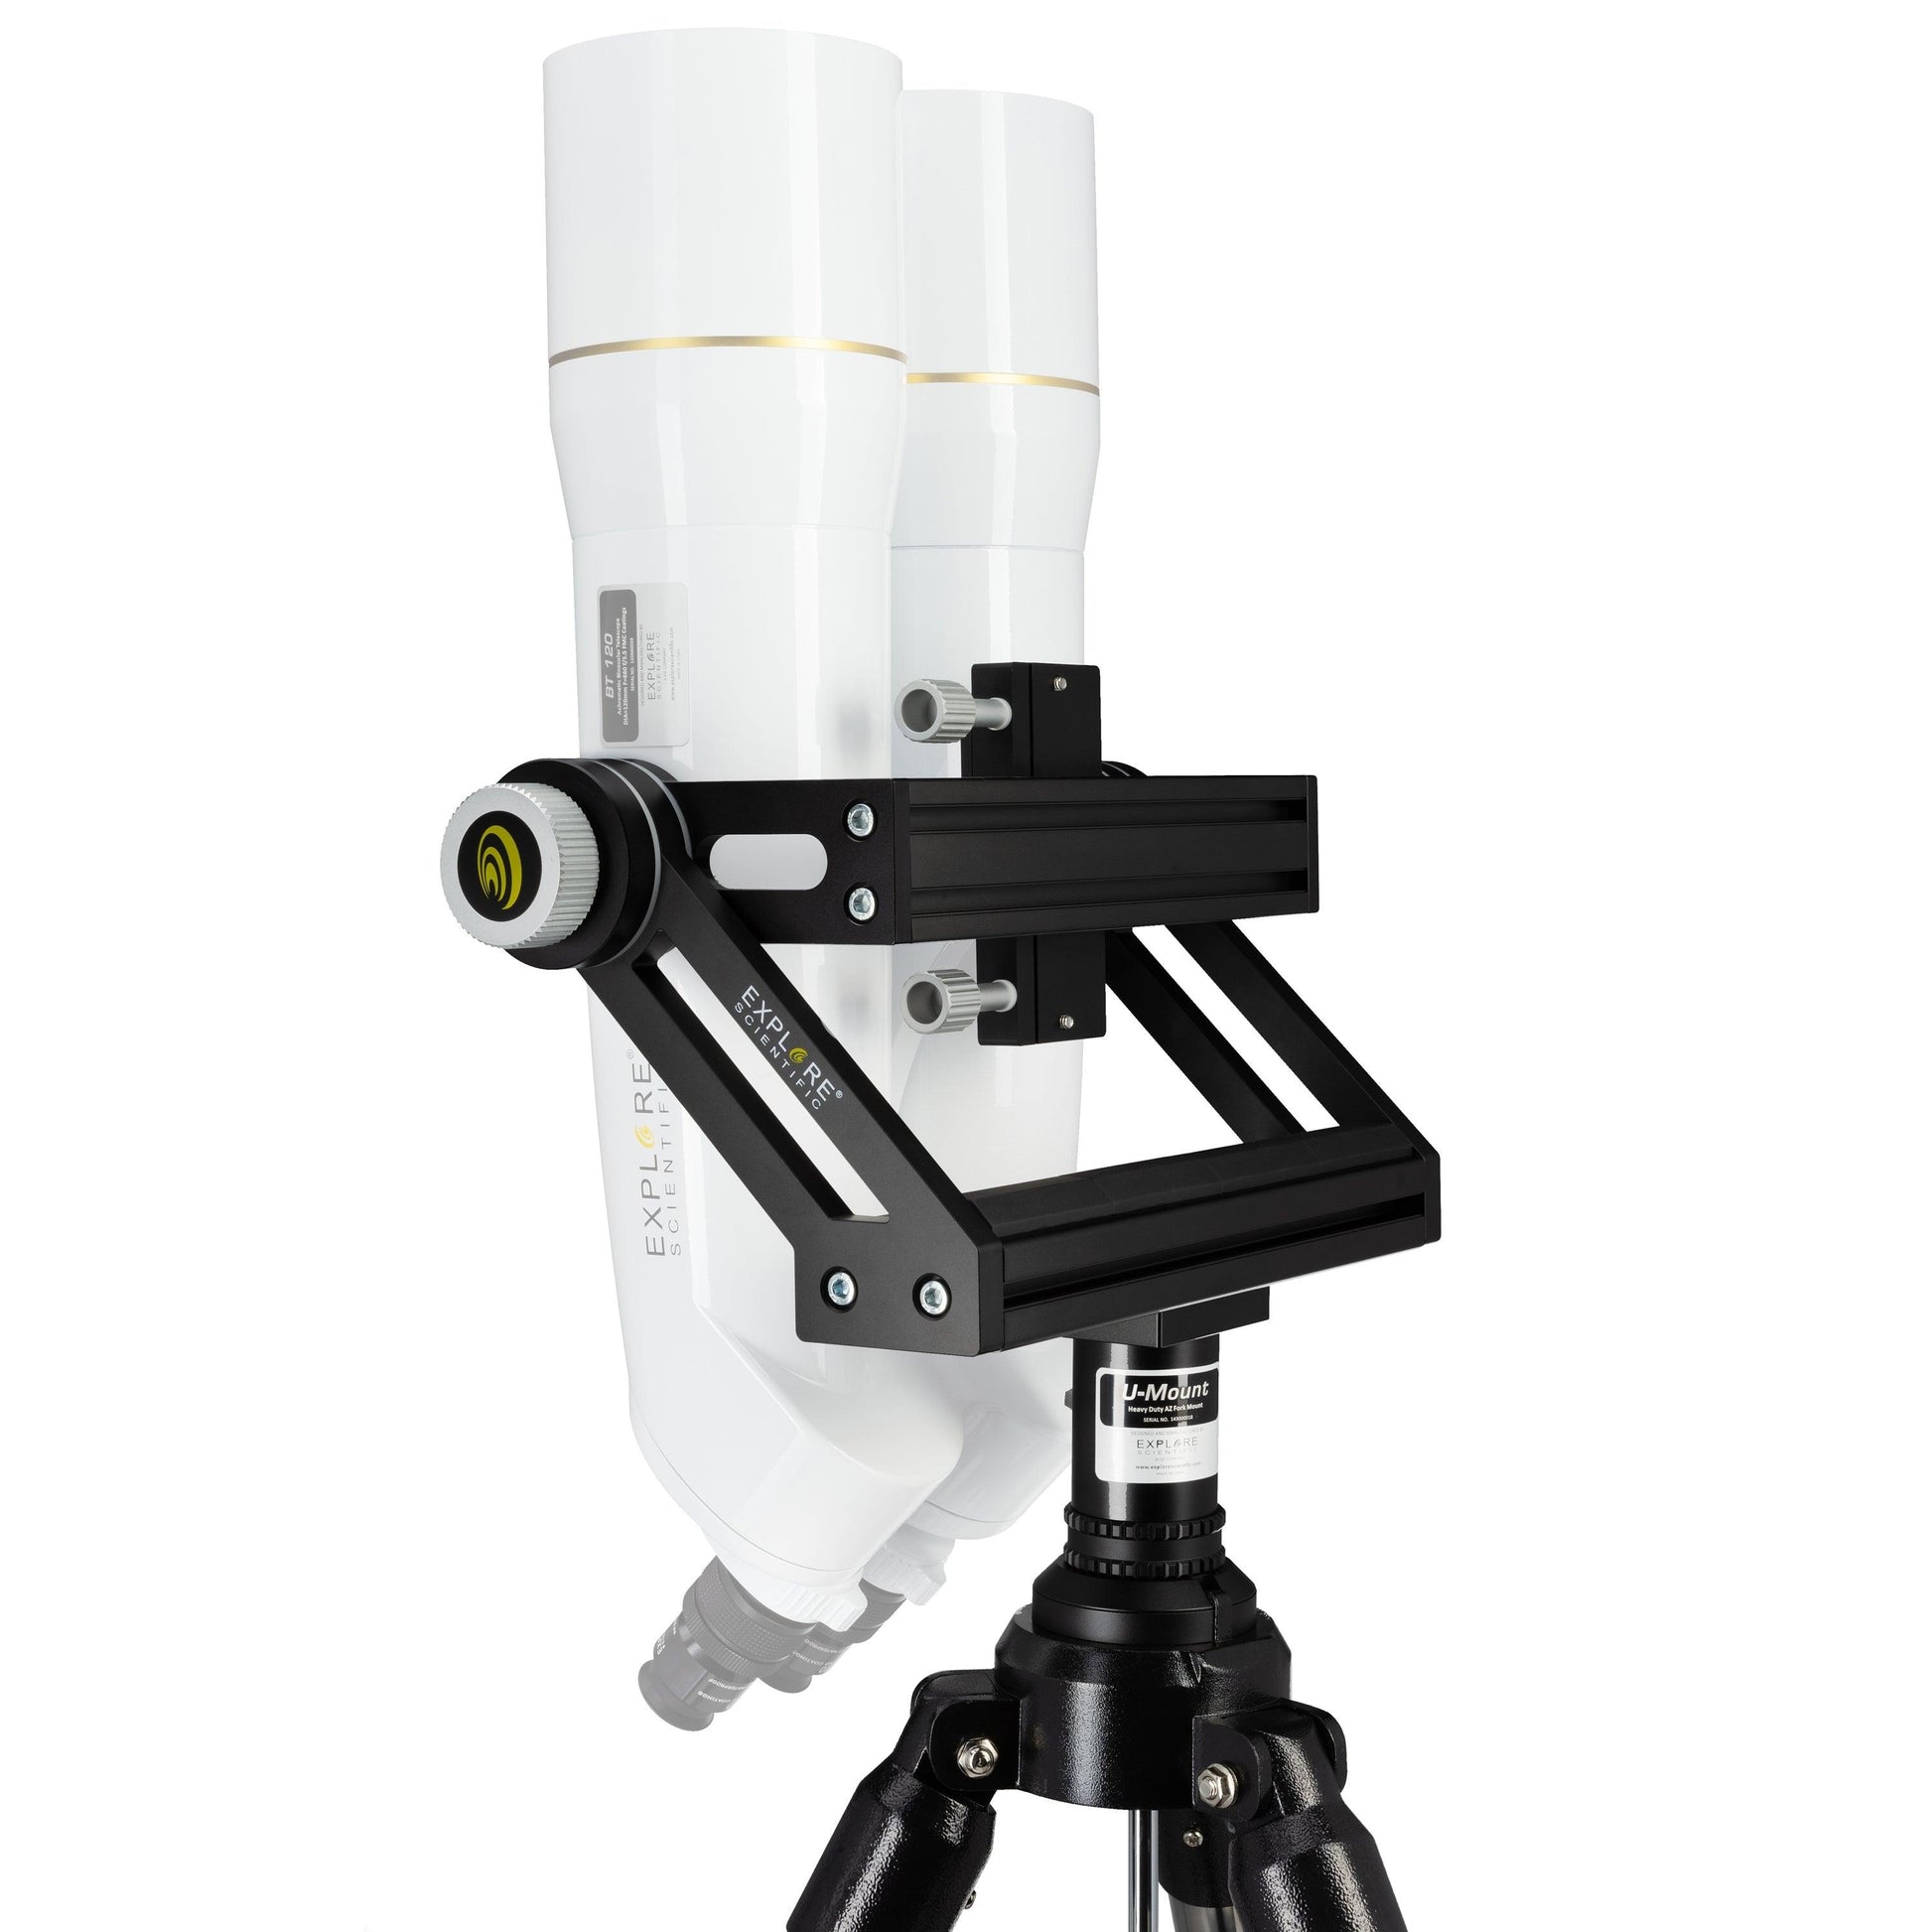 U-mount with tripod for large binoculars - Silverlight Optics